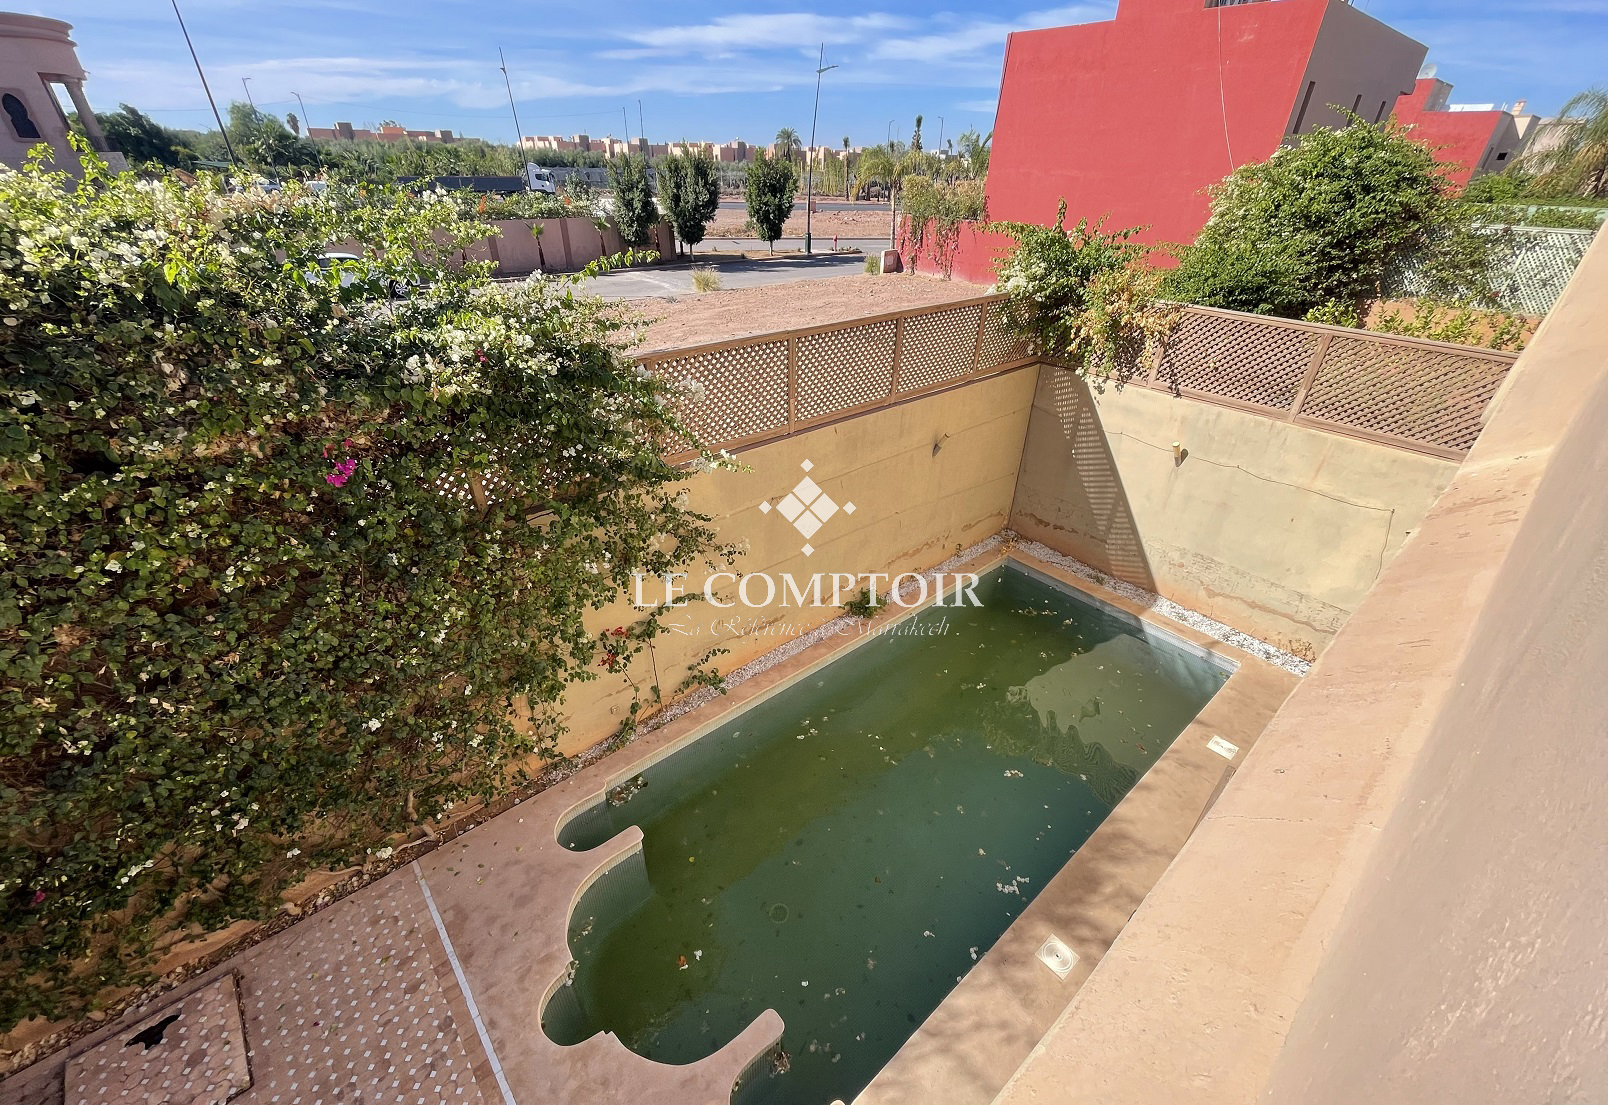 Le Comptoir Immobilier Agence Immobiliere Marrakech Villa Residence Non Meublee Location Marakech Maroc Piscine 15 2